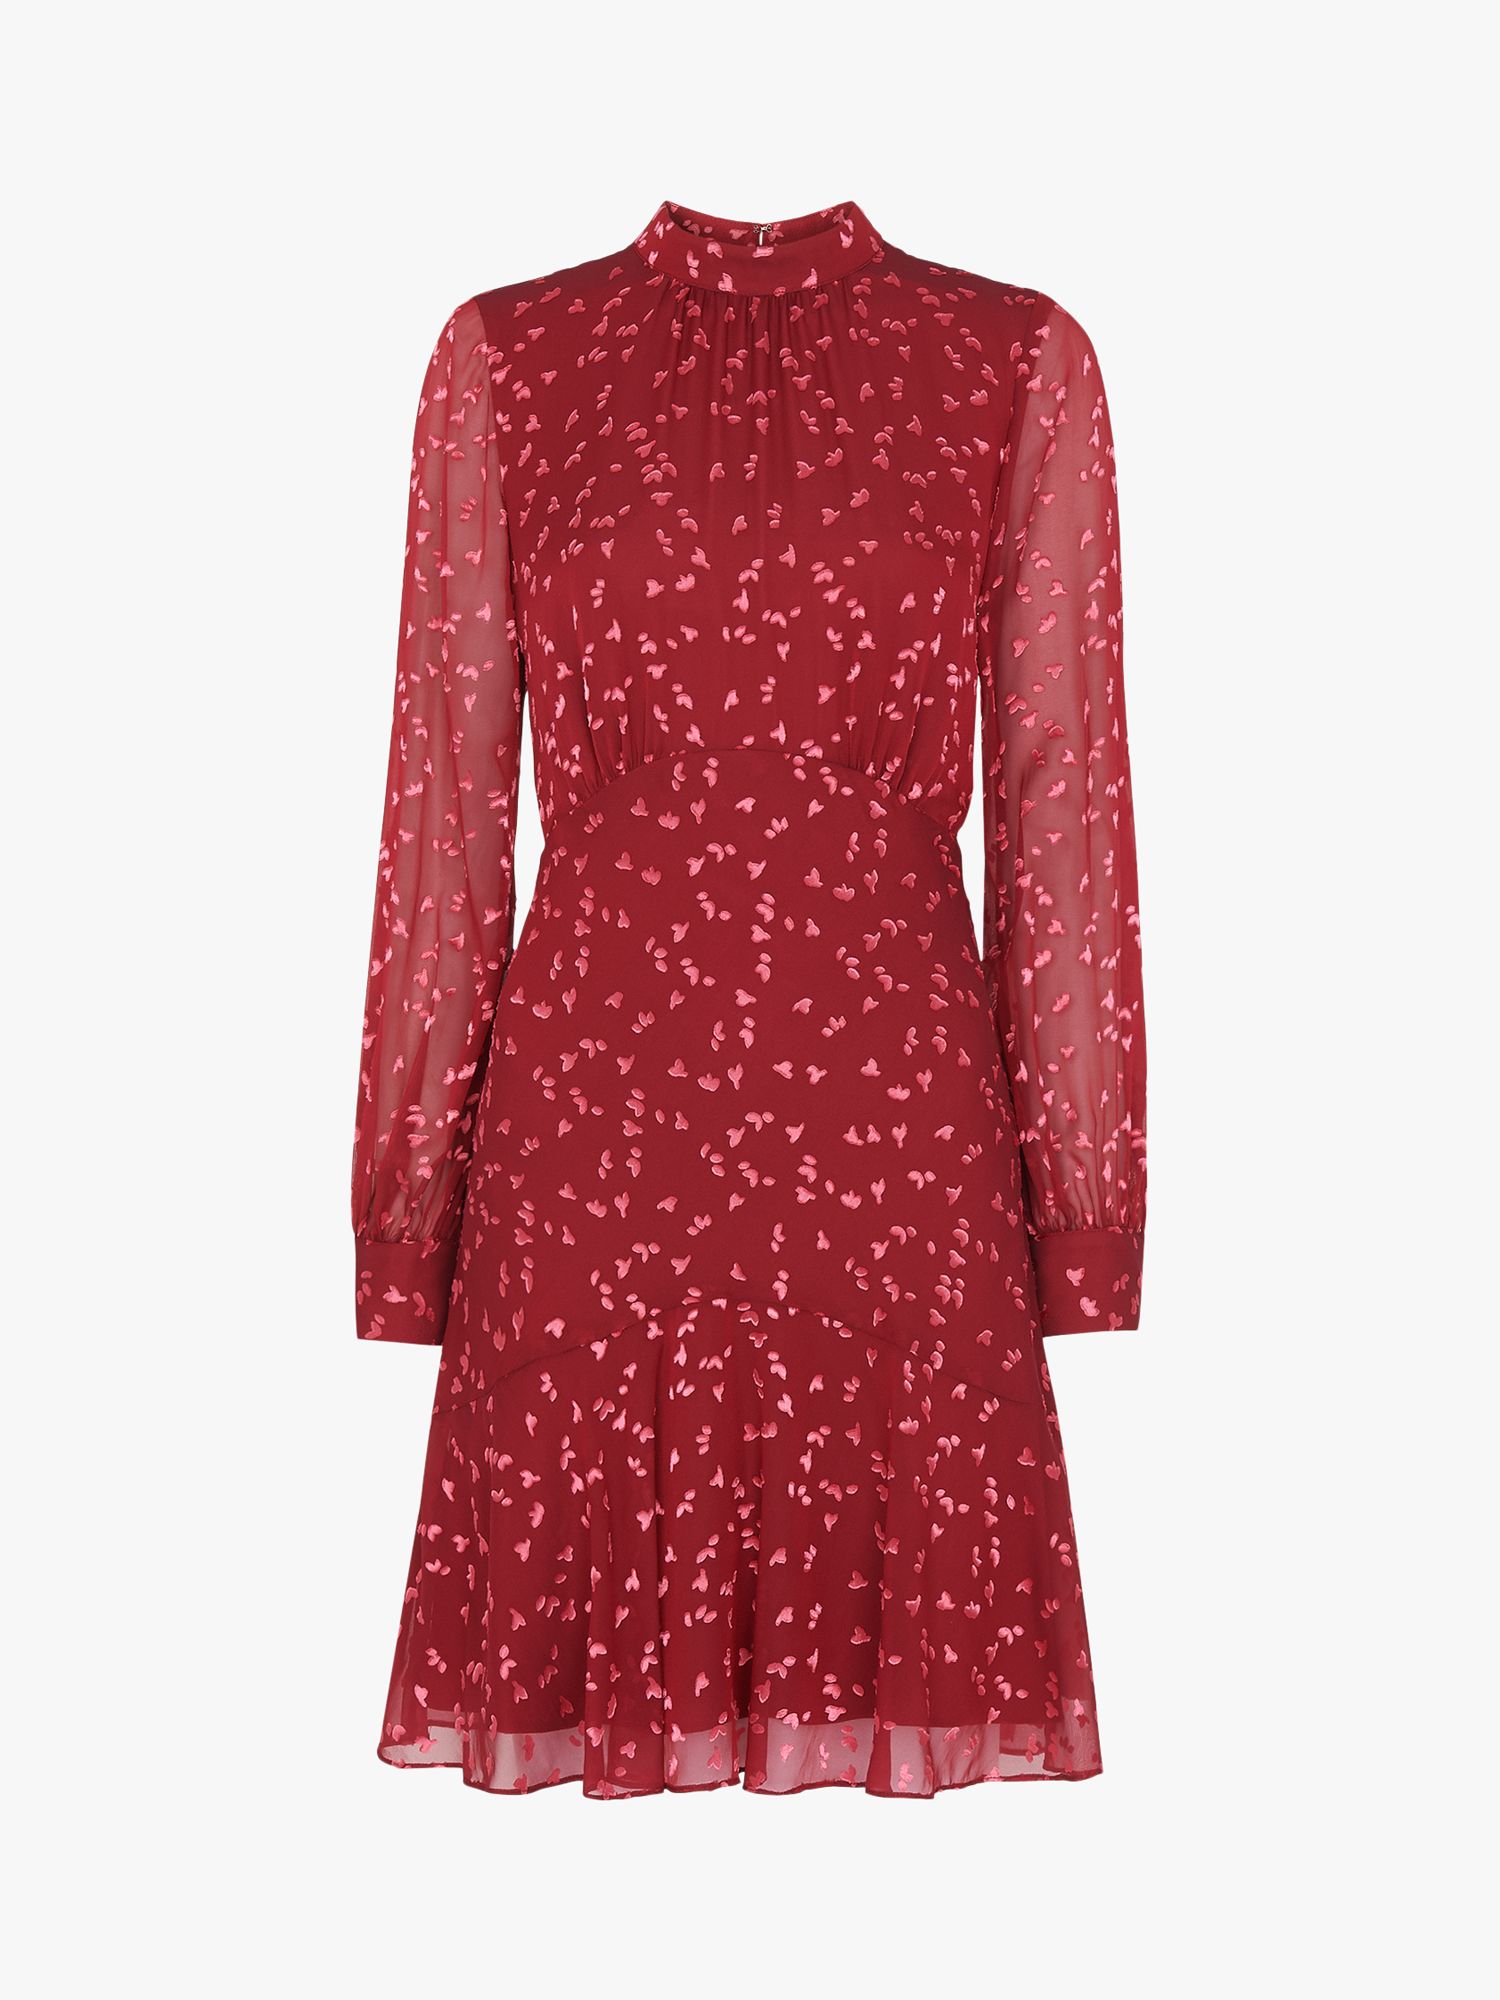 Whistles Falling Leaves Mini Dress, Pink Multi at John Lewis & Partners